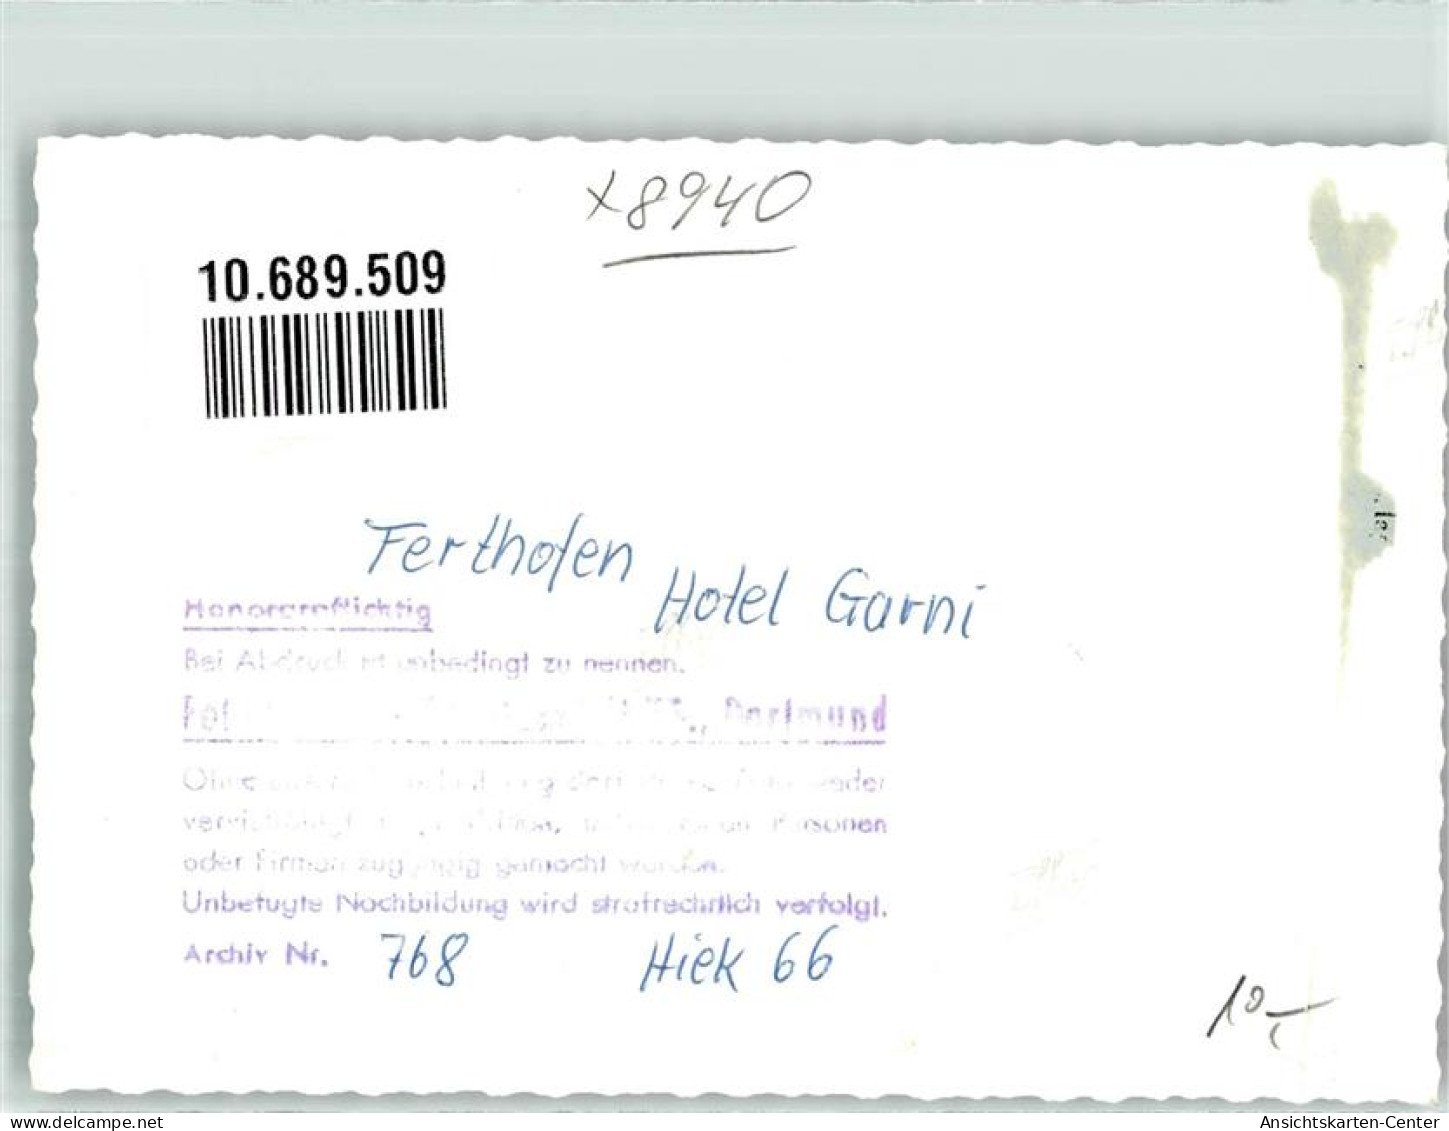 10689509 - Ferthofen - Memmingen